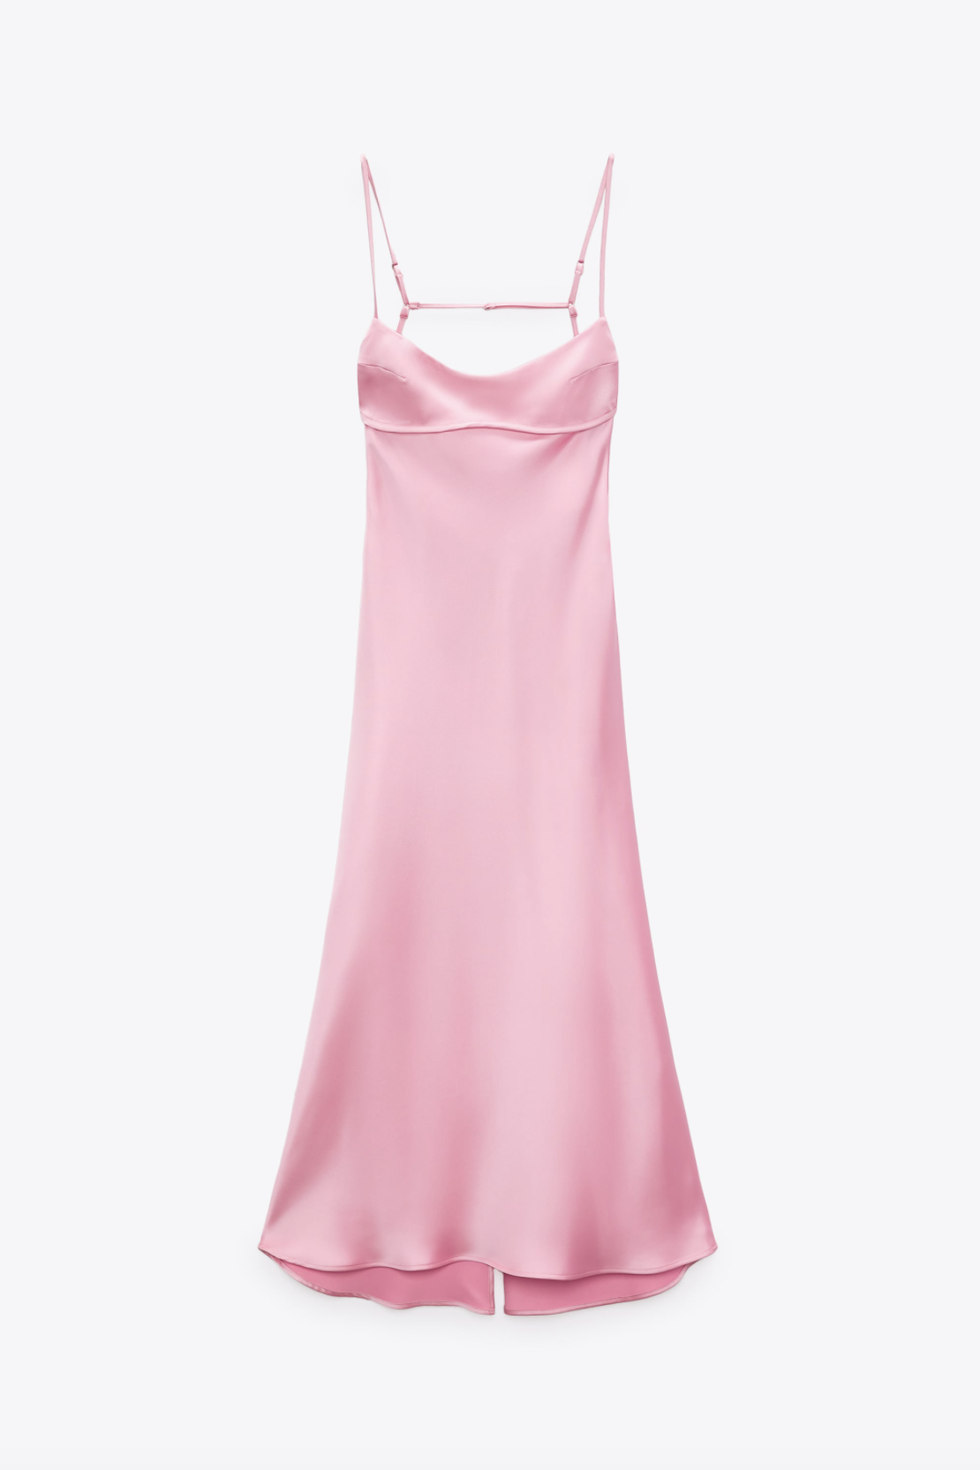 A $60 Pink Zara Satin Slip Dress Is Taking Over TikTok